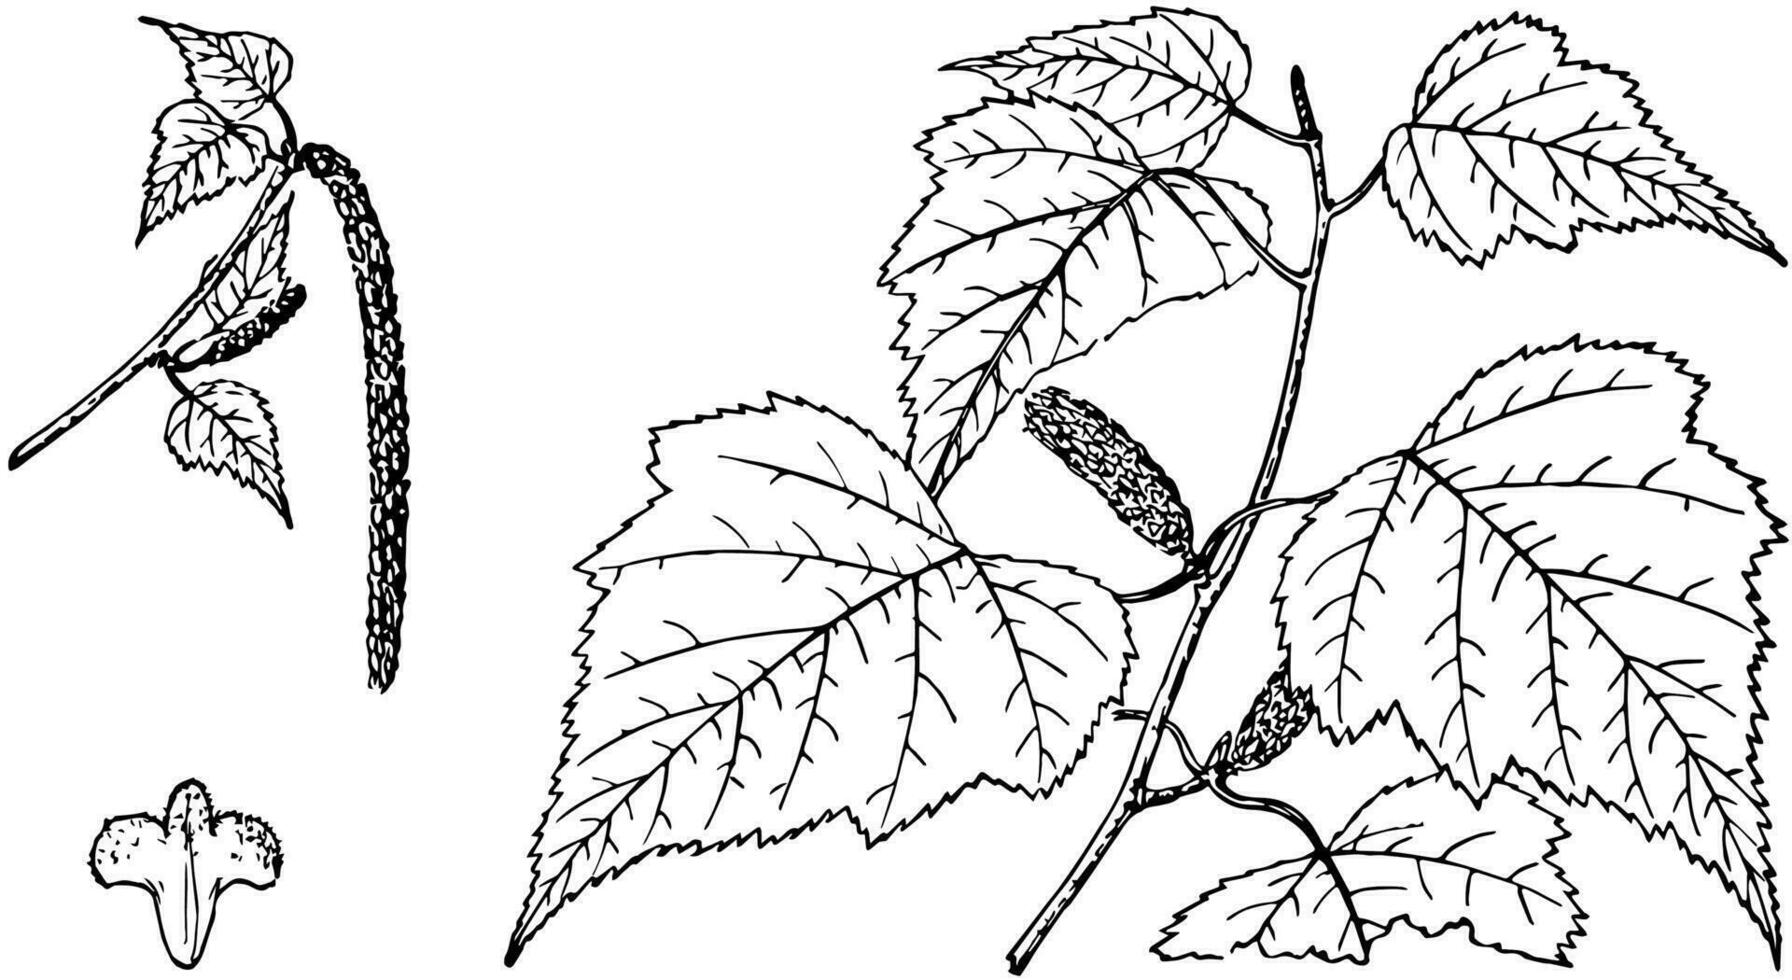 Branch of Gray Birch vintage illustration. vector